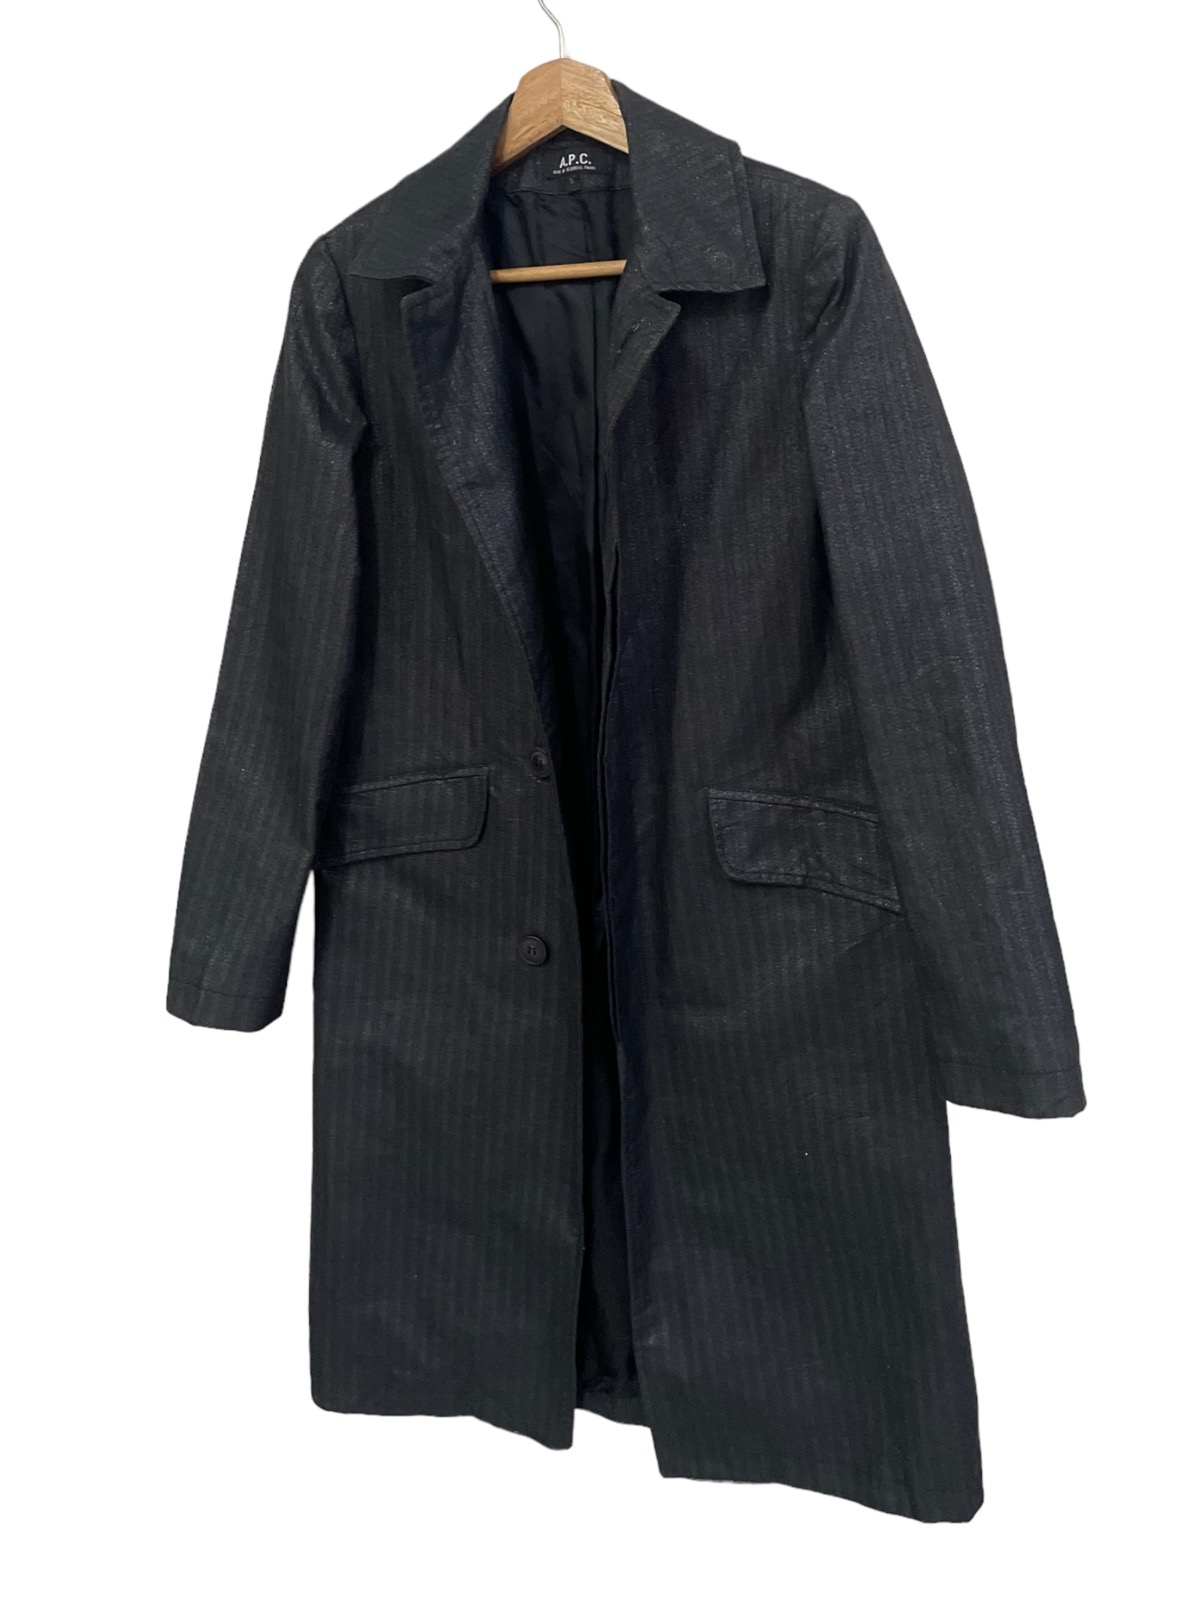 💥 Glitter Black APC Button Long Jacket - 3